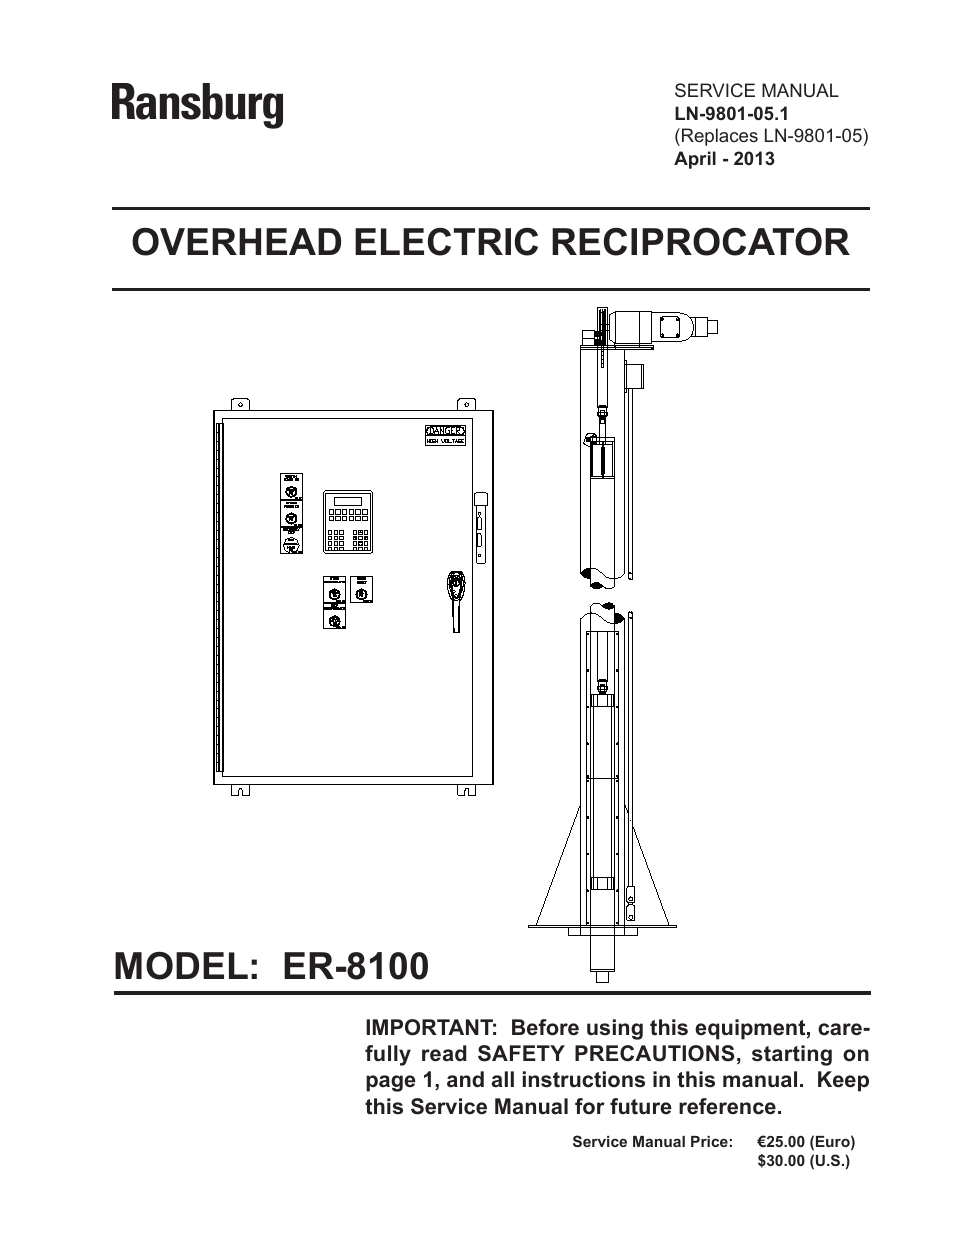 Overhead Electric Reciprocator ER-8100